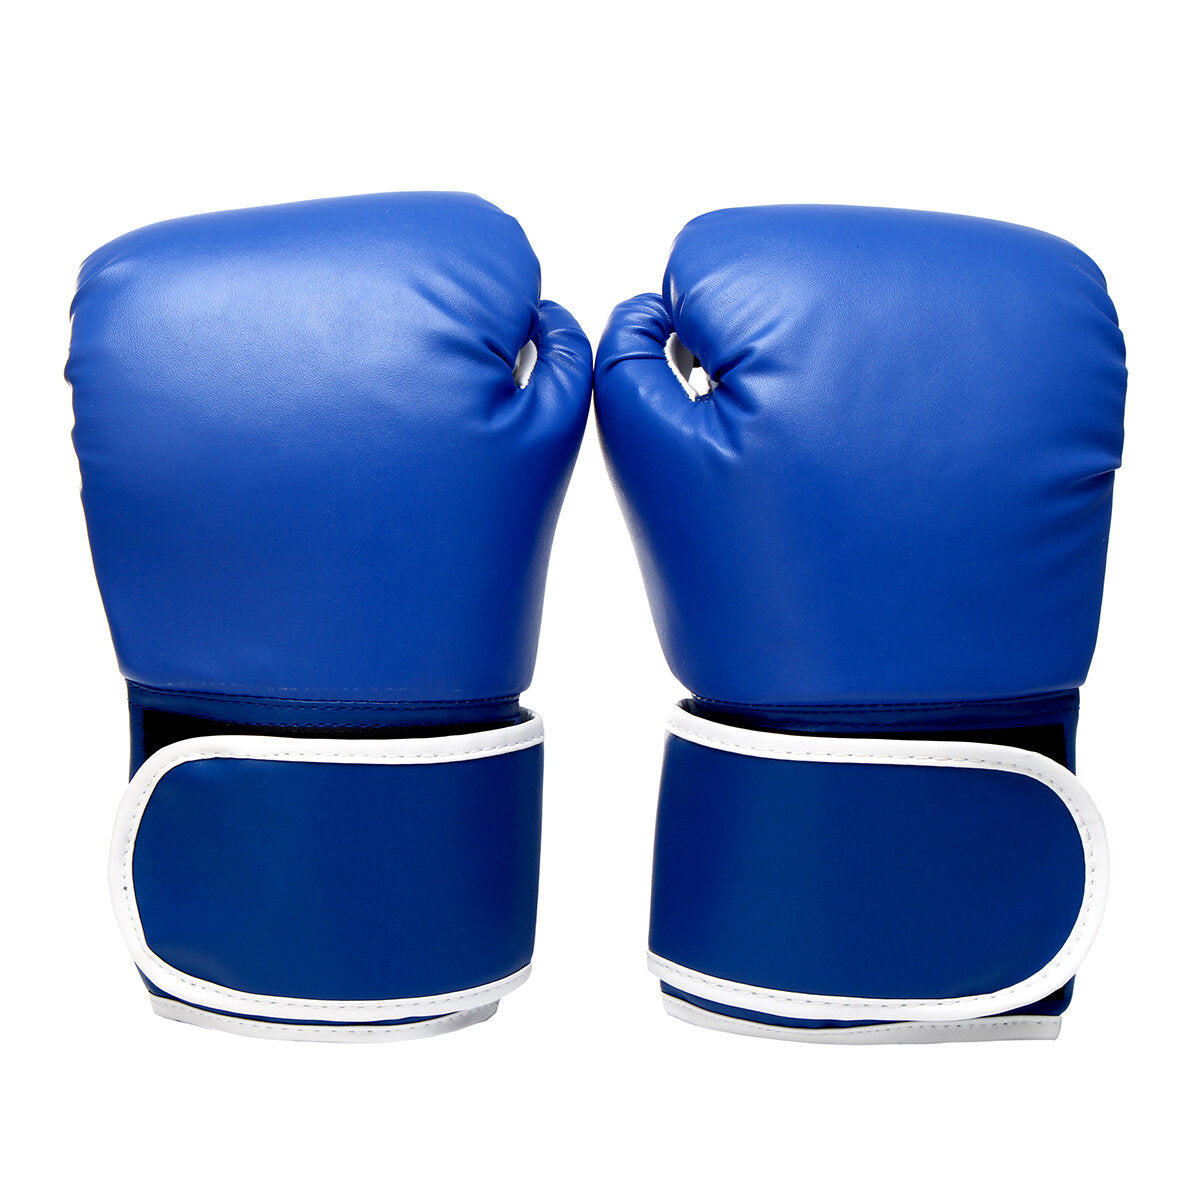 16oz Boxing Gloves Unisex Training Fighting Gloves Sandbag Gym Gloves Sanda Equipments